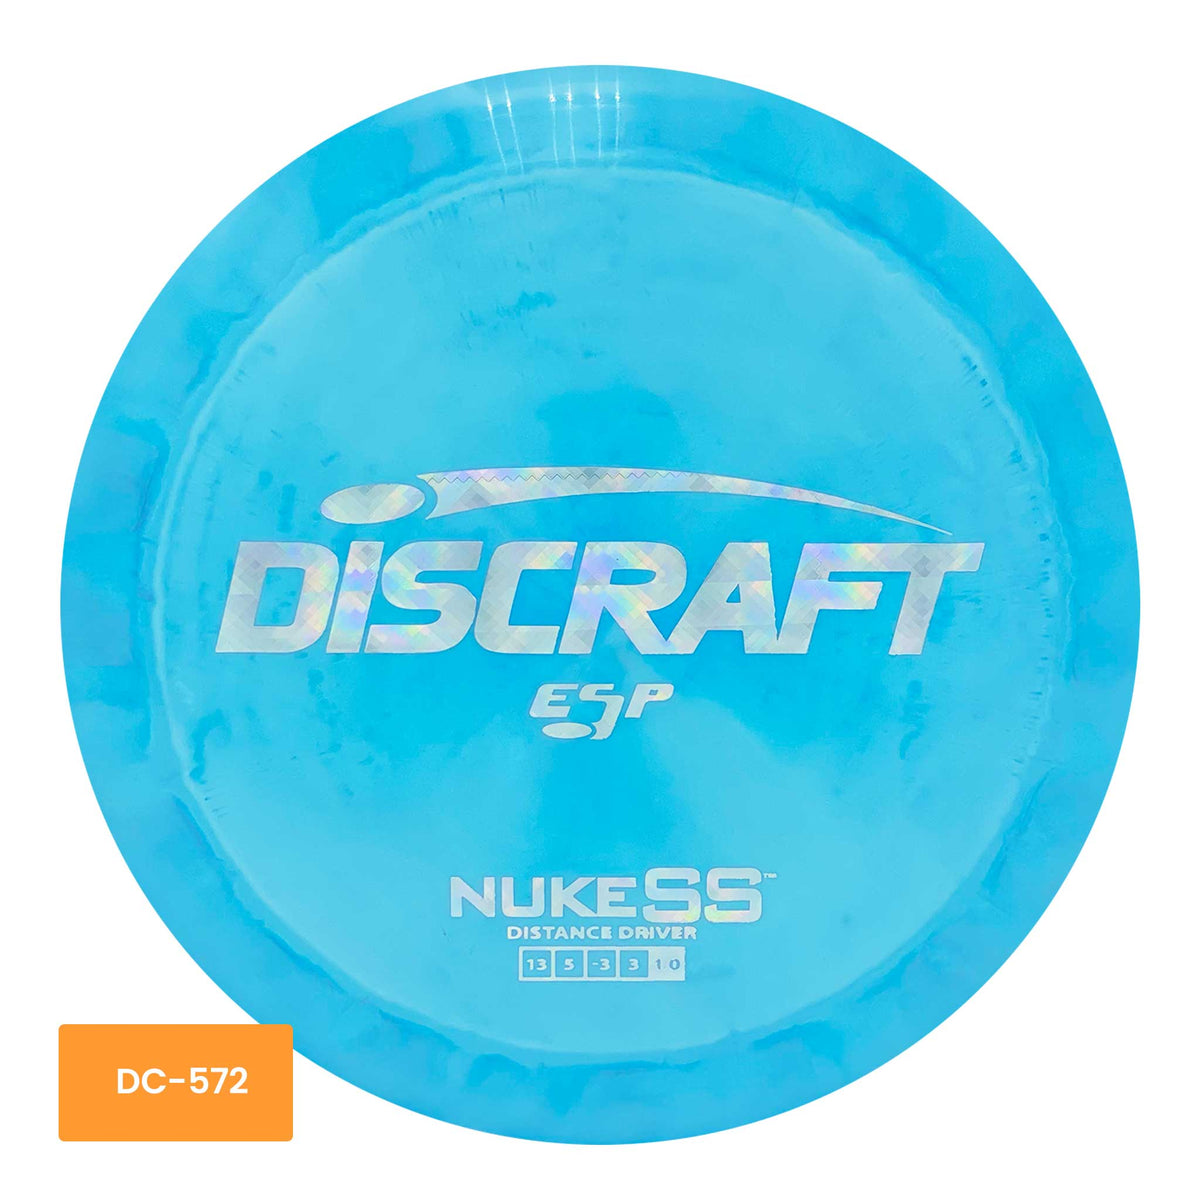 Discraft ESP Nuke SS distance driver - Blue